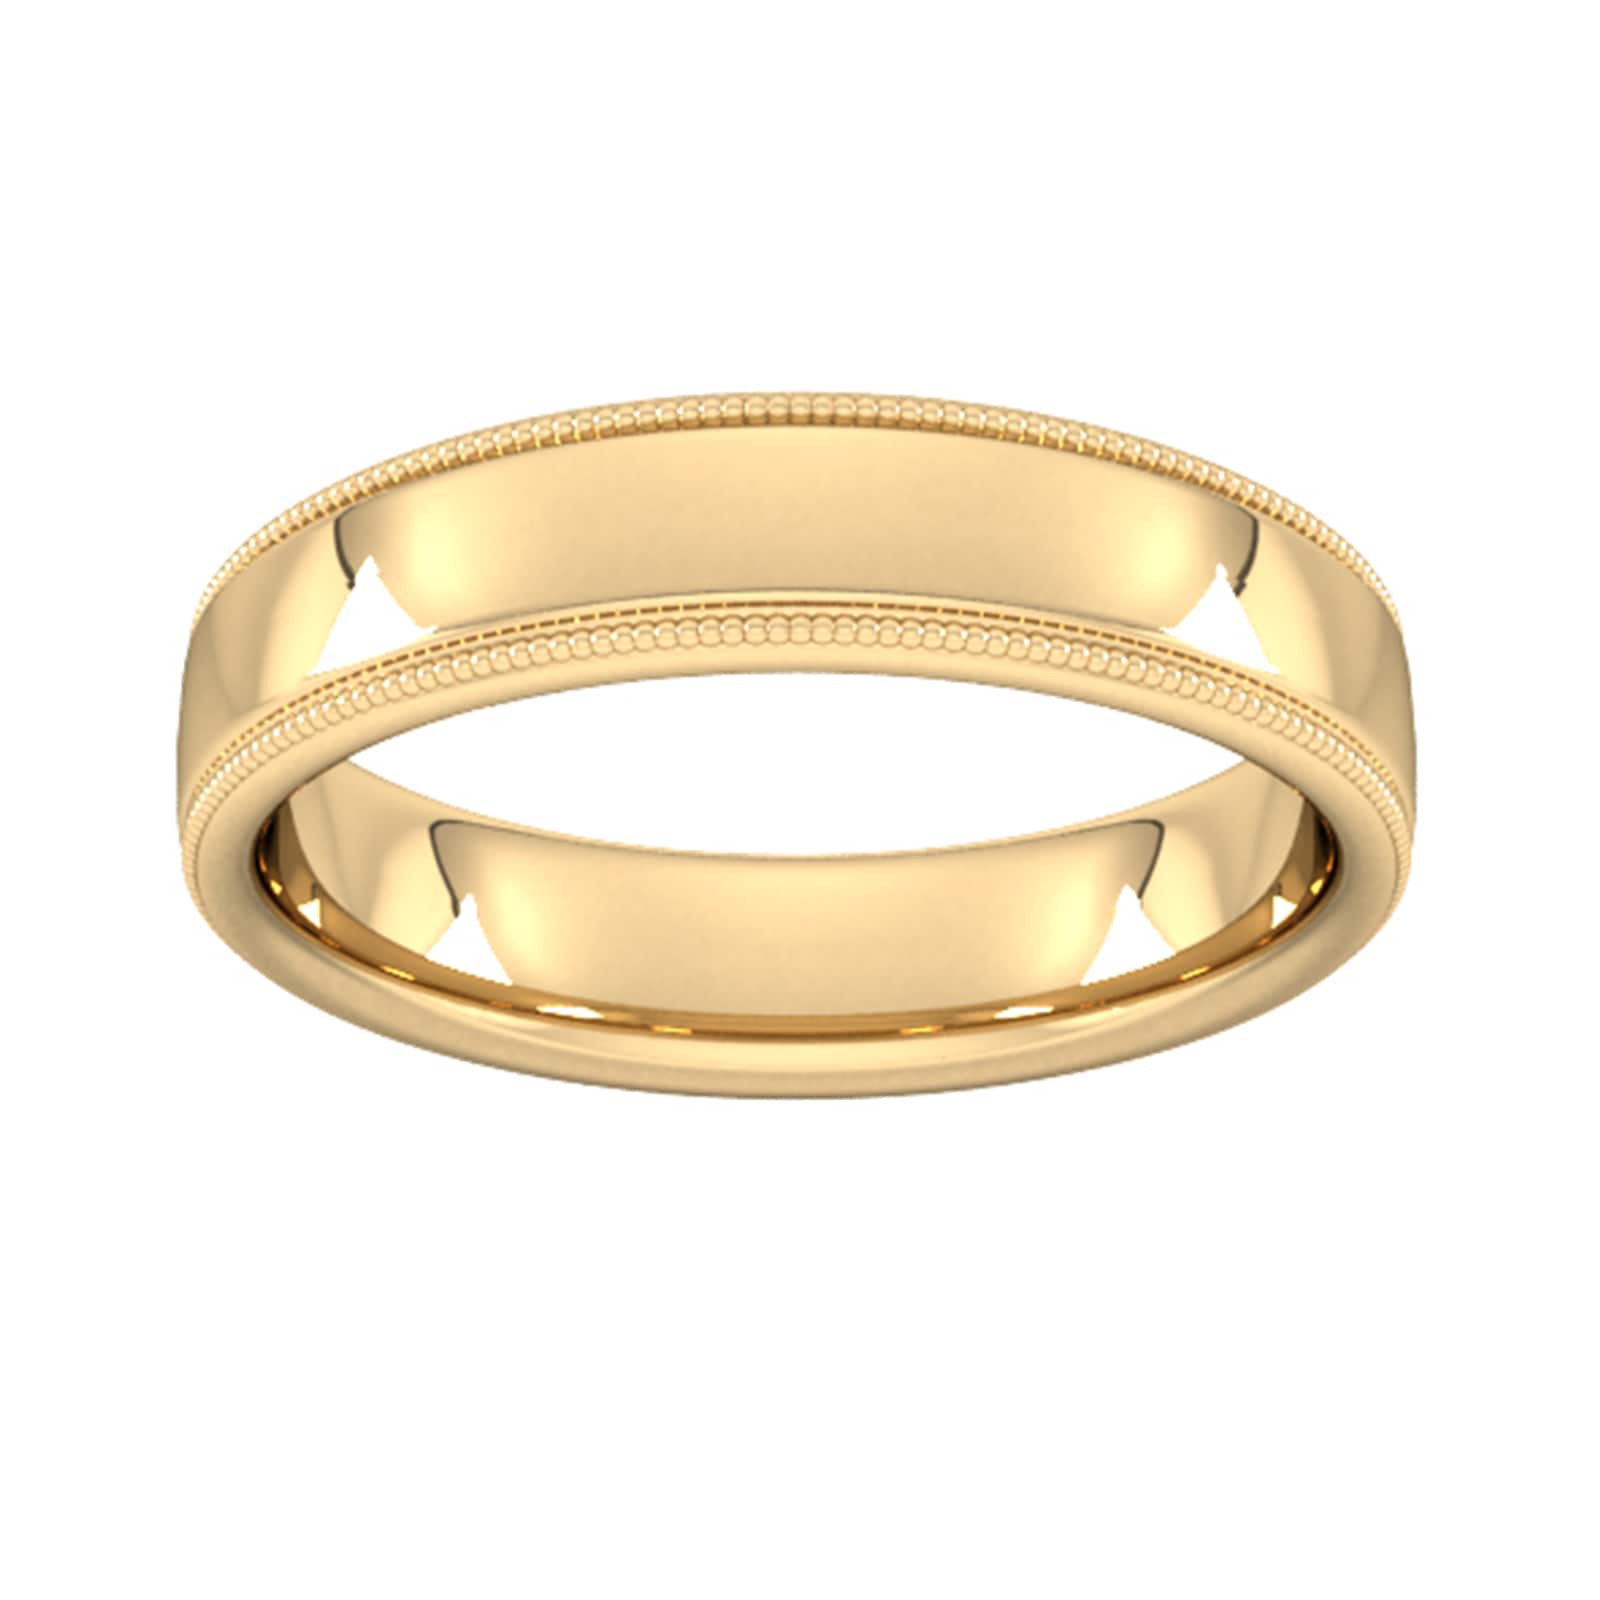 5mm Slight Court Extra Heavy Milgrain Edge Wedding Ring In 18 Carat Yellow Gold - Ring Size Q